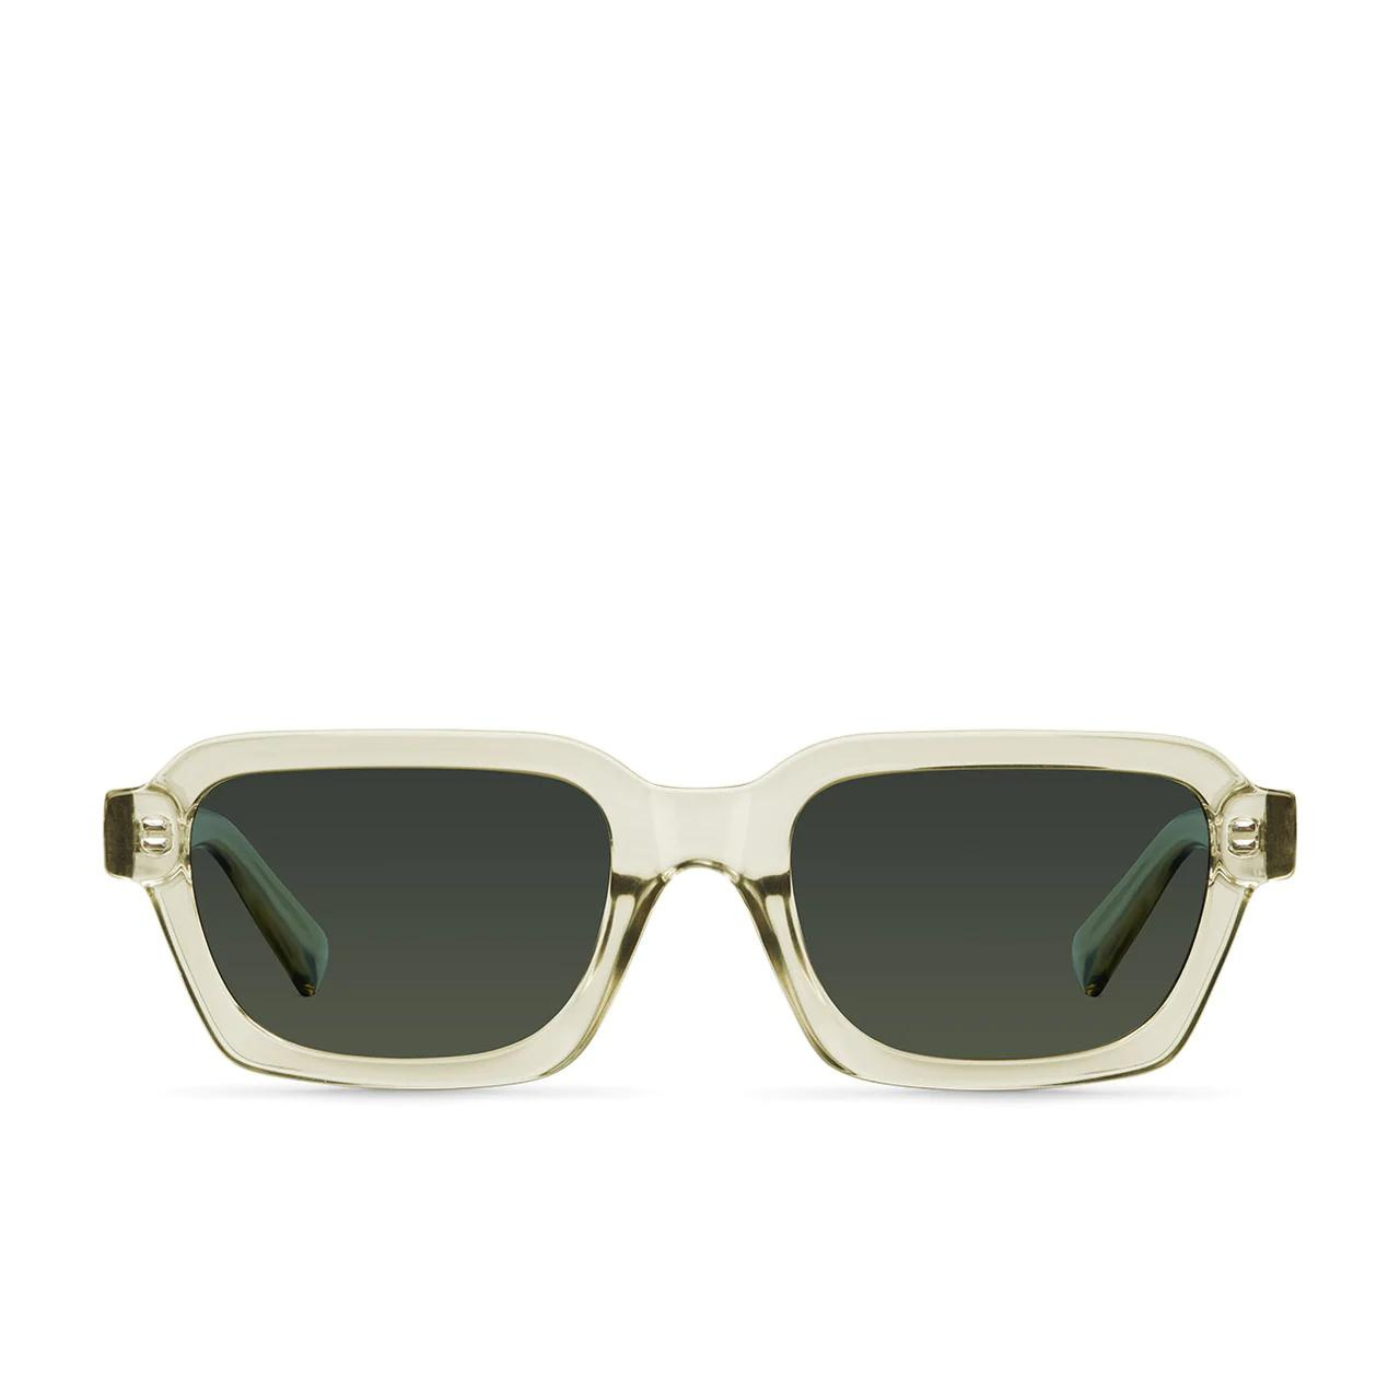 Óculos de sol Adisa Sand Olive Meller